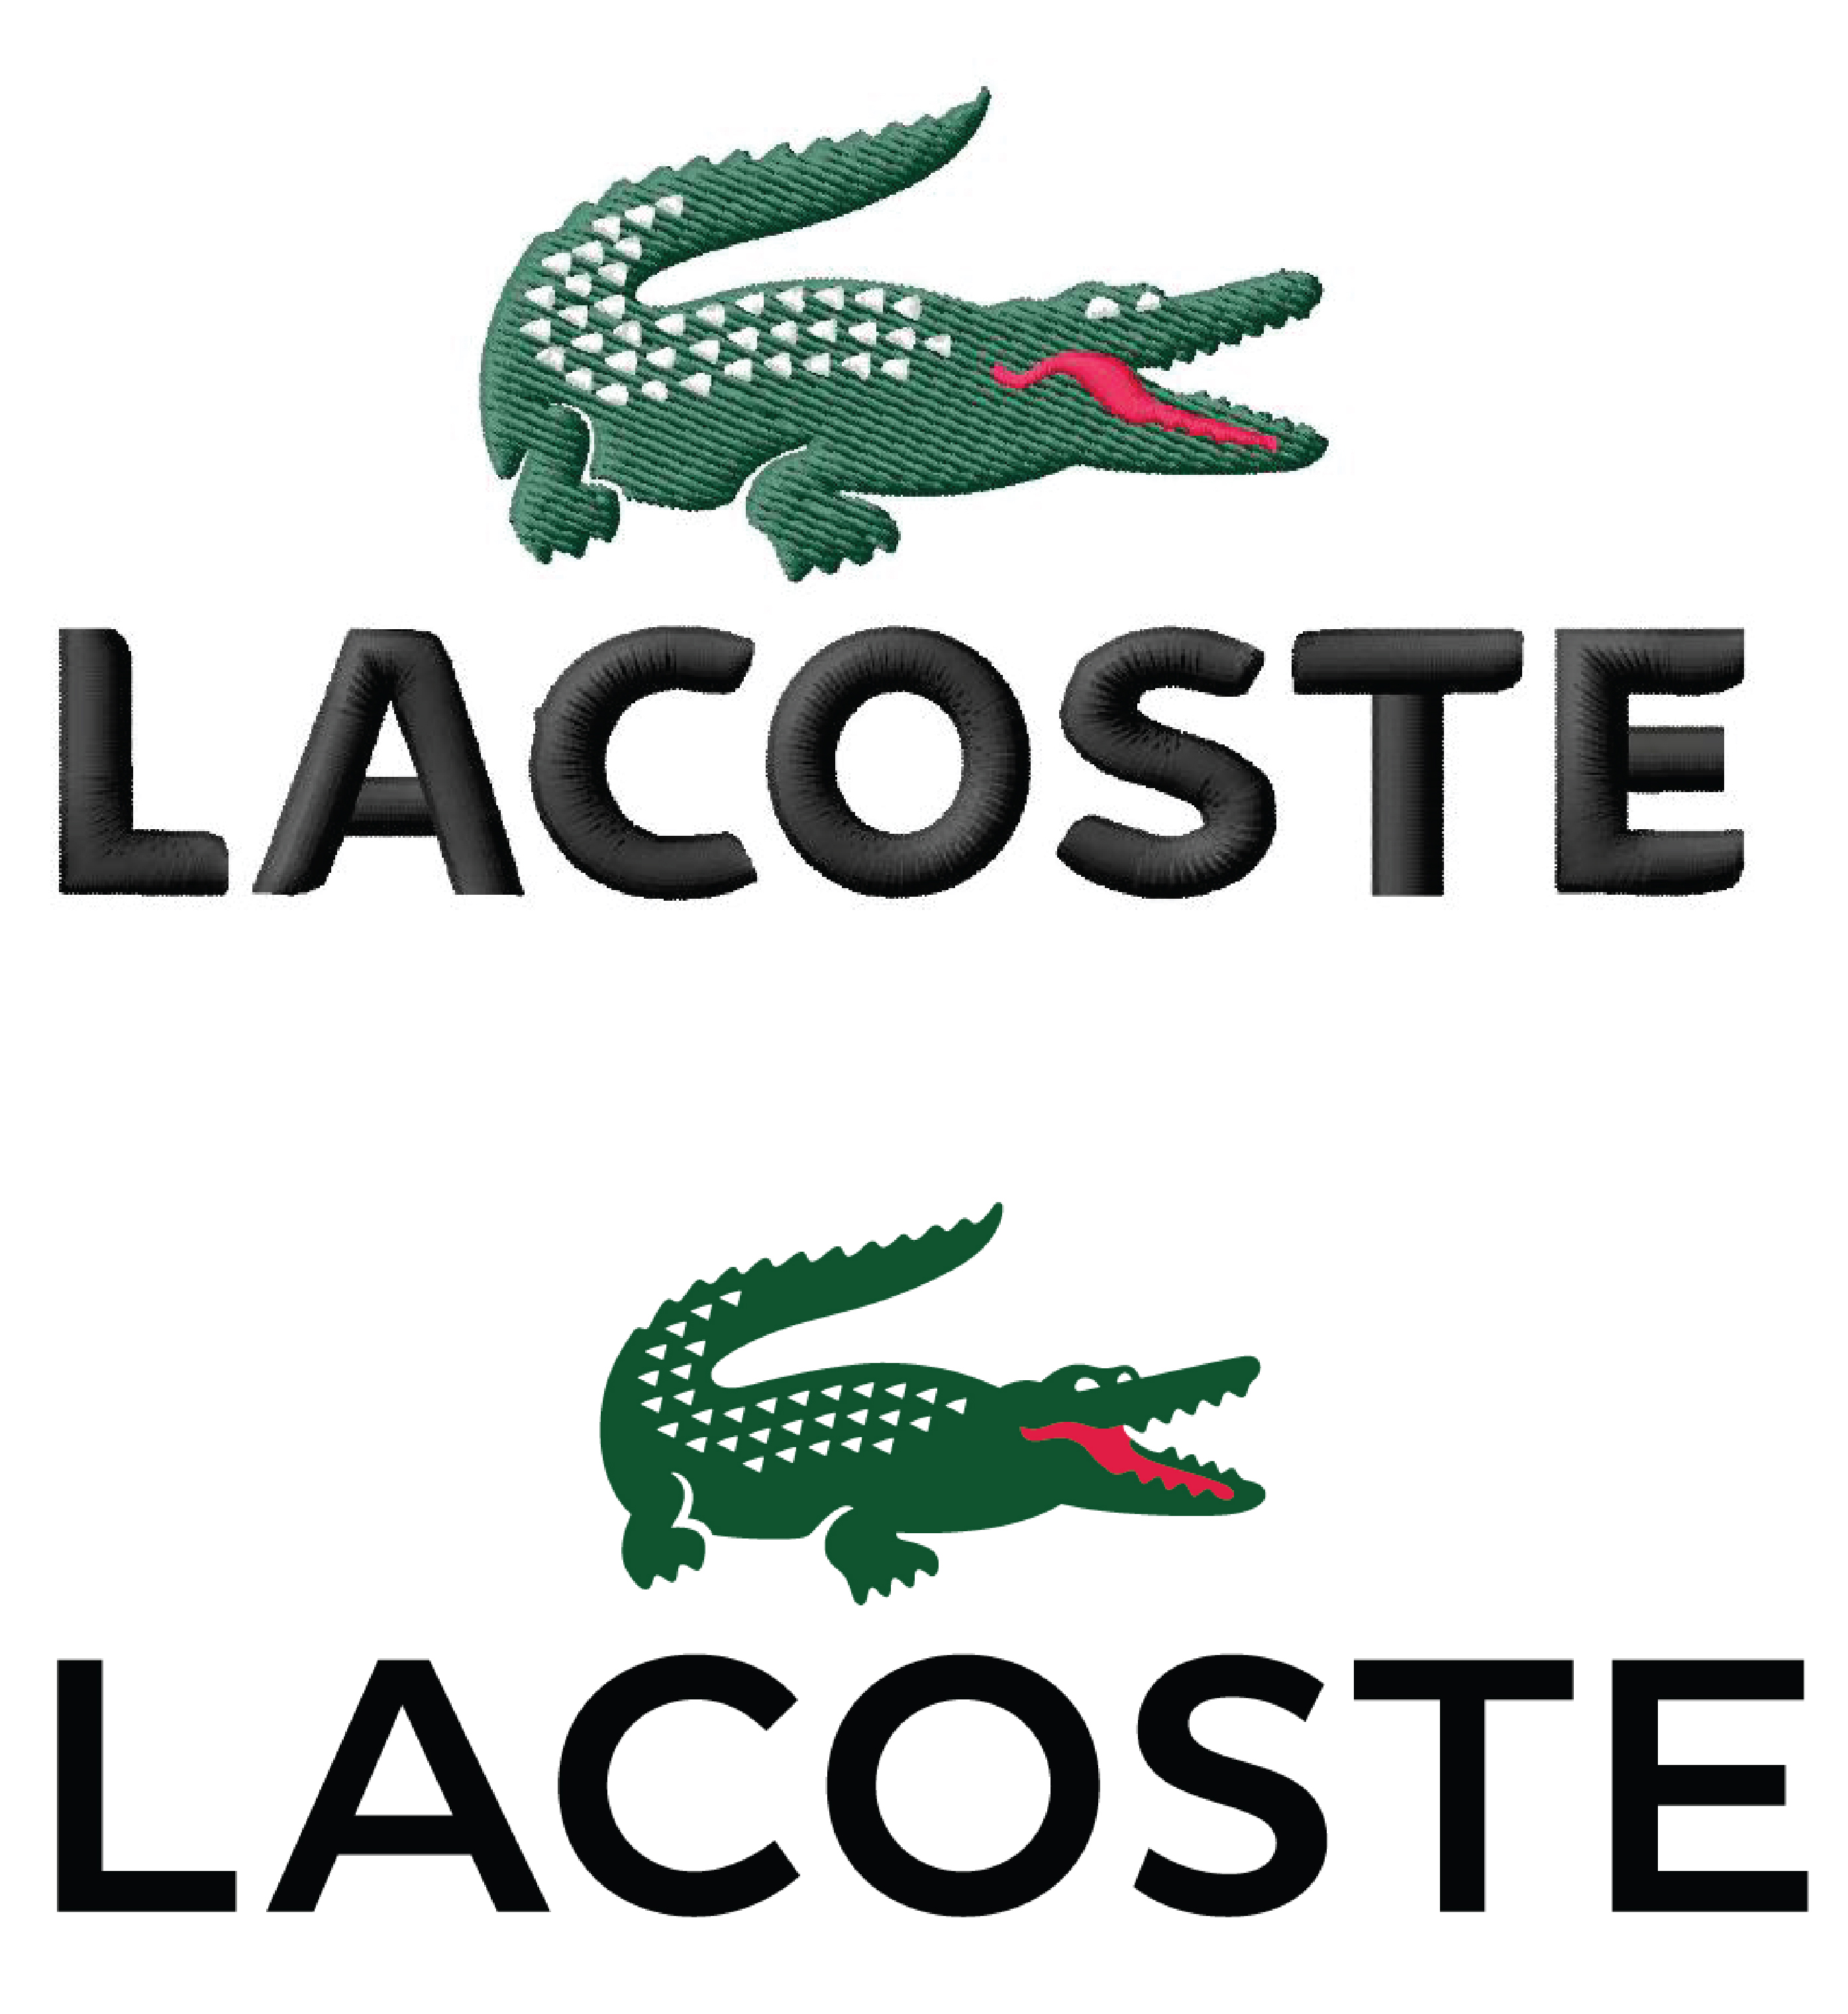 izod lacoste logo